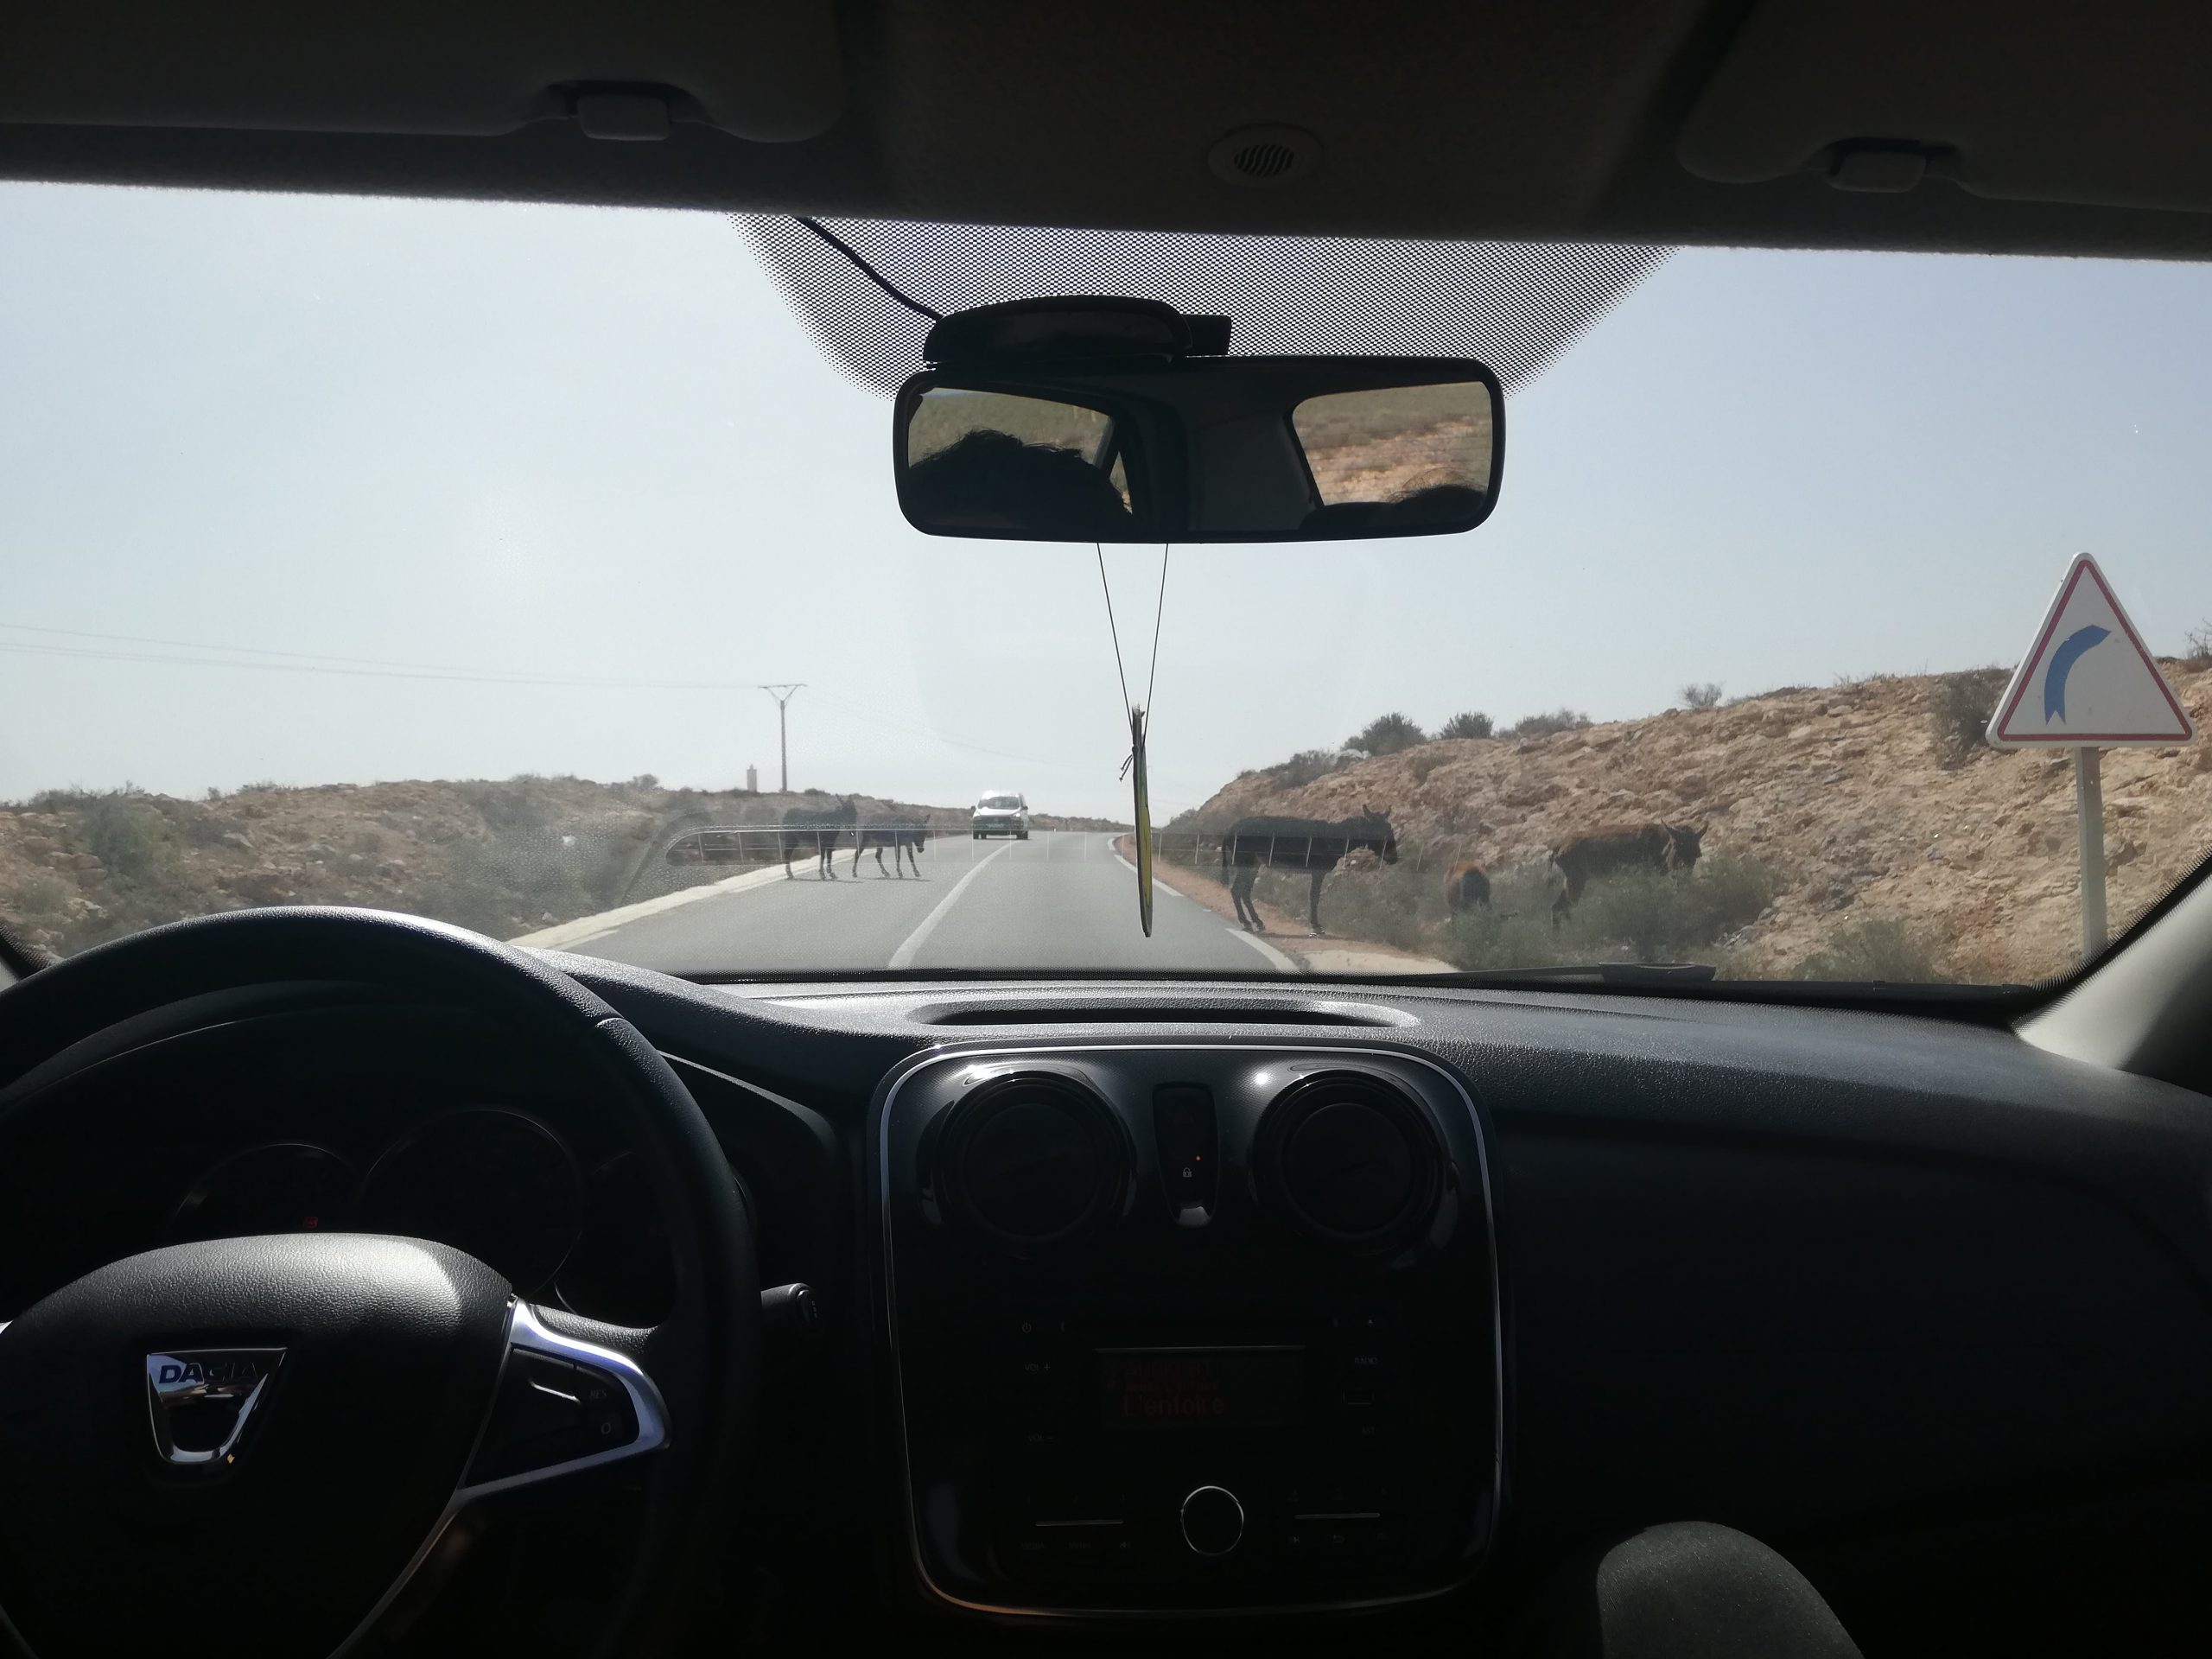 Road to Legzira